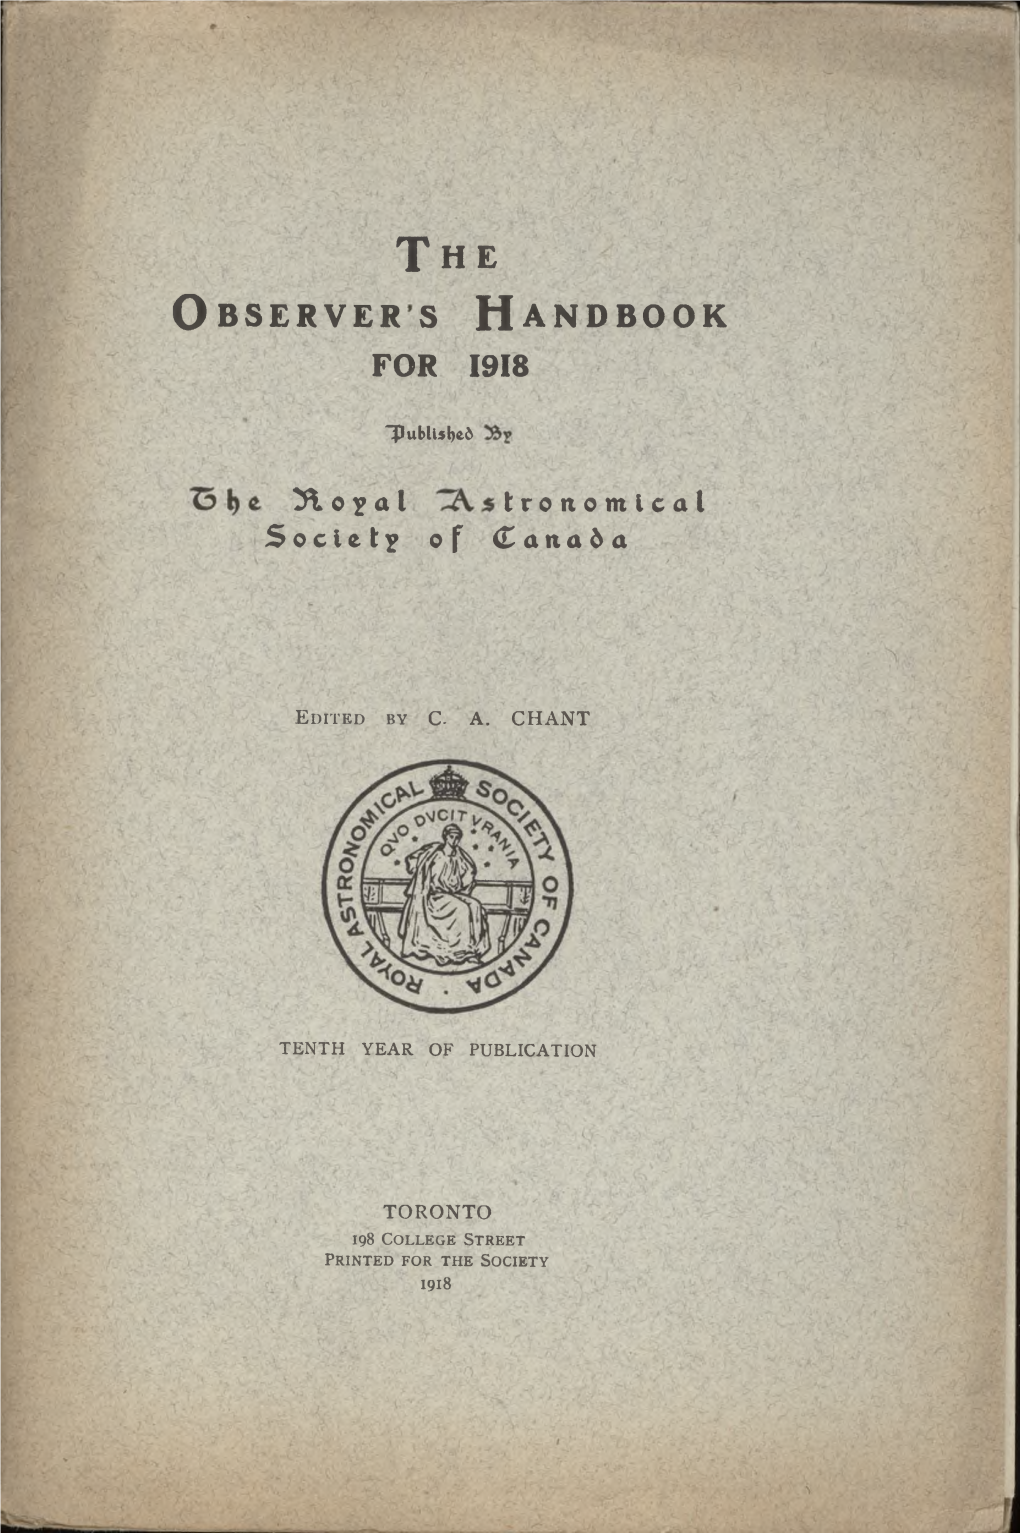 The Observer's Handbook for 1918